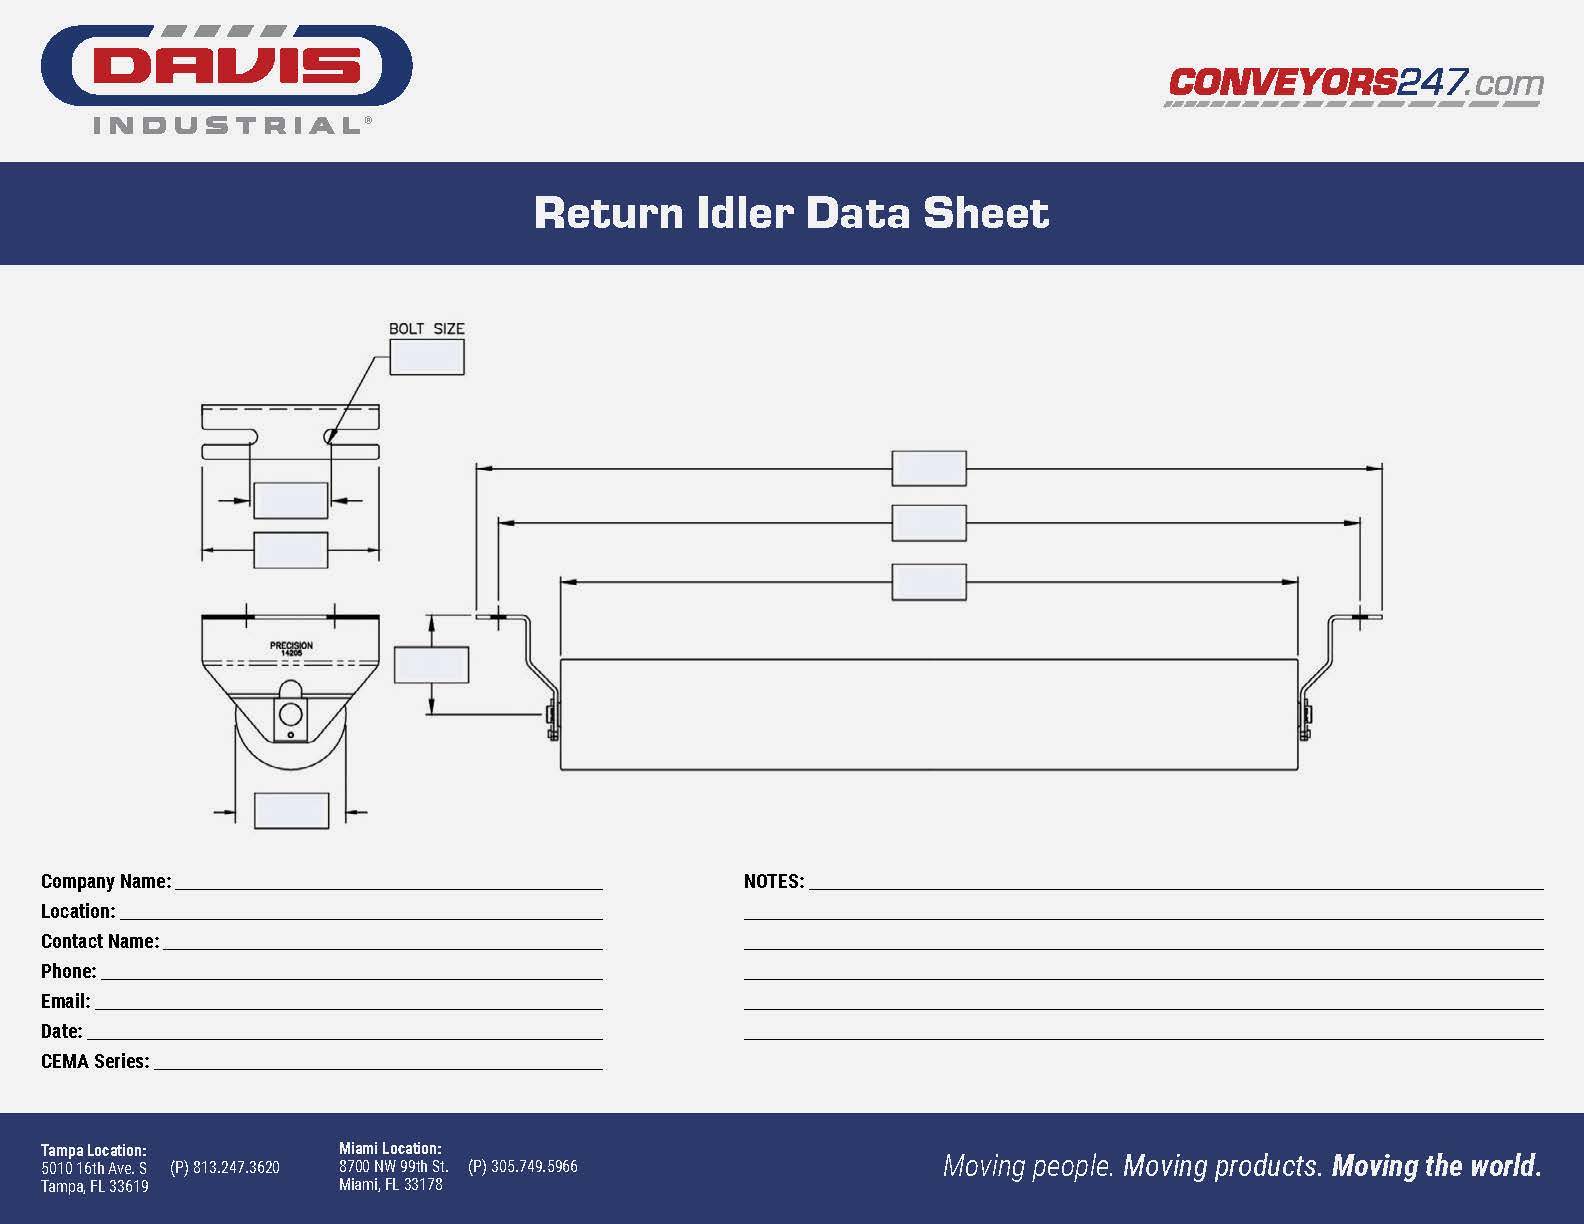 Davis_Return Idler Data Sheet